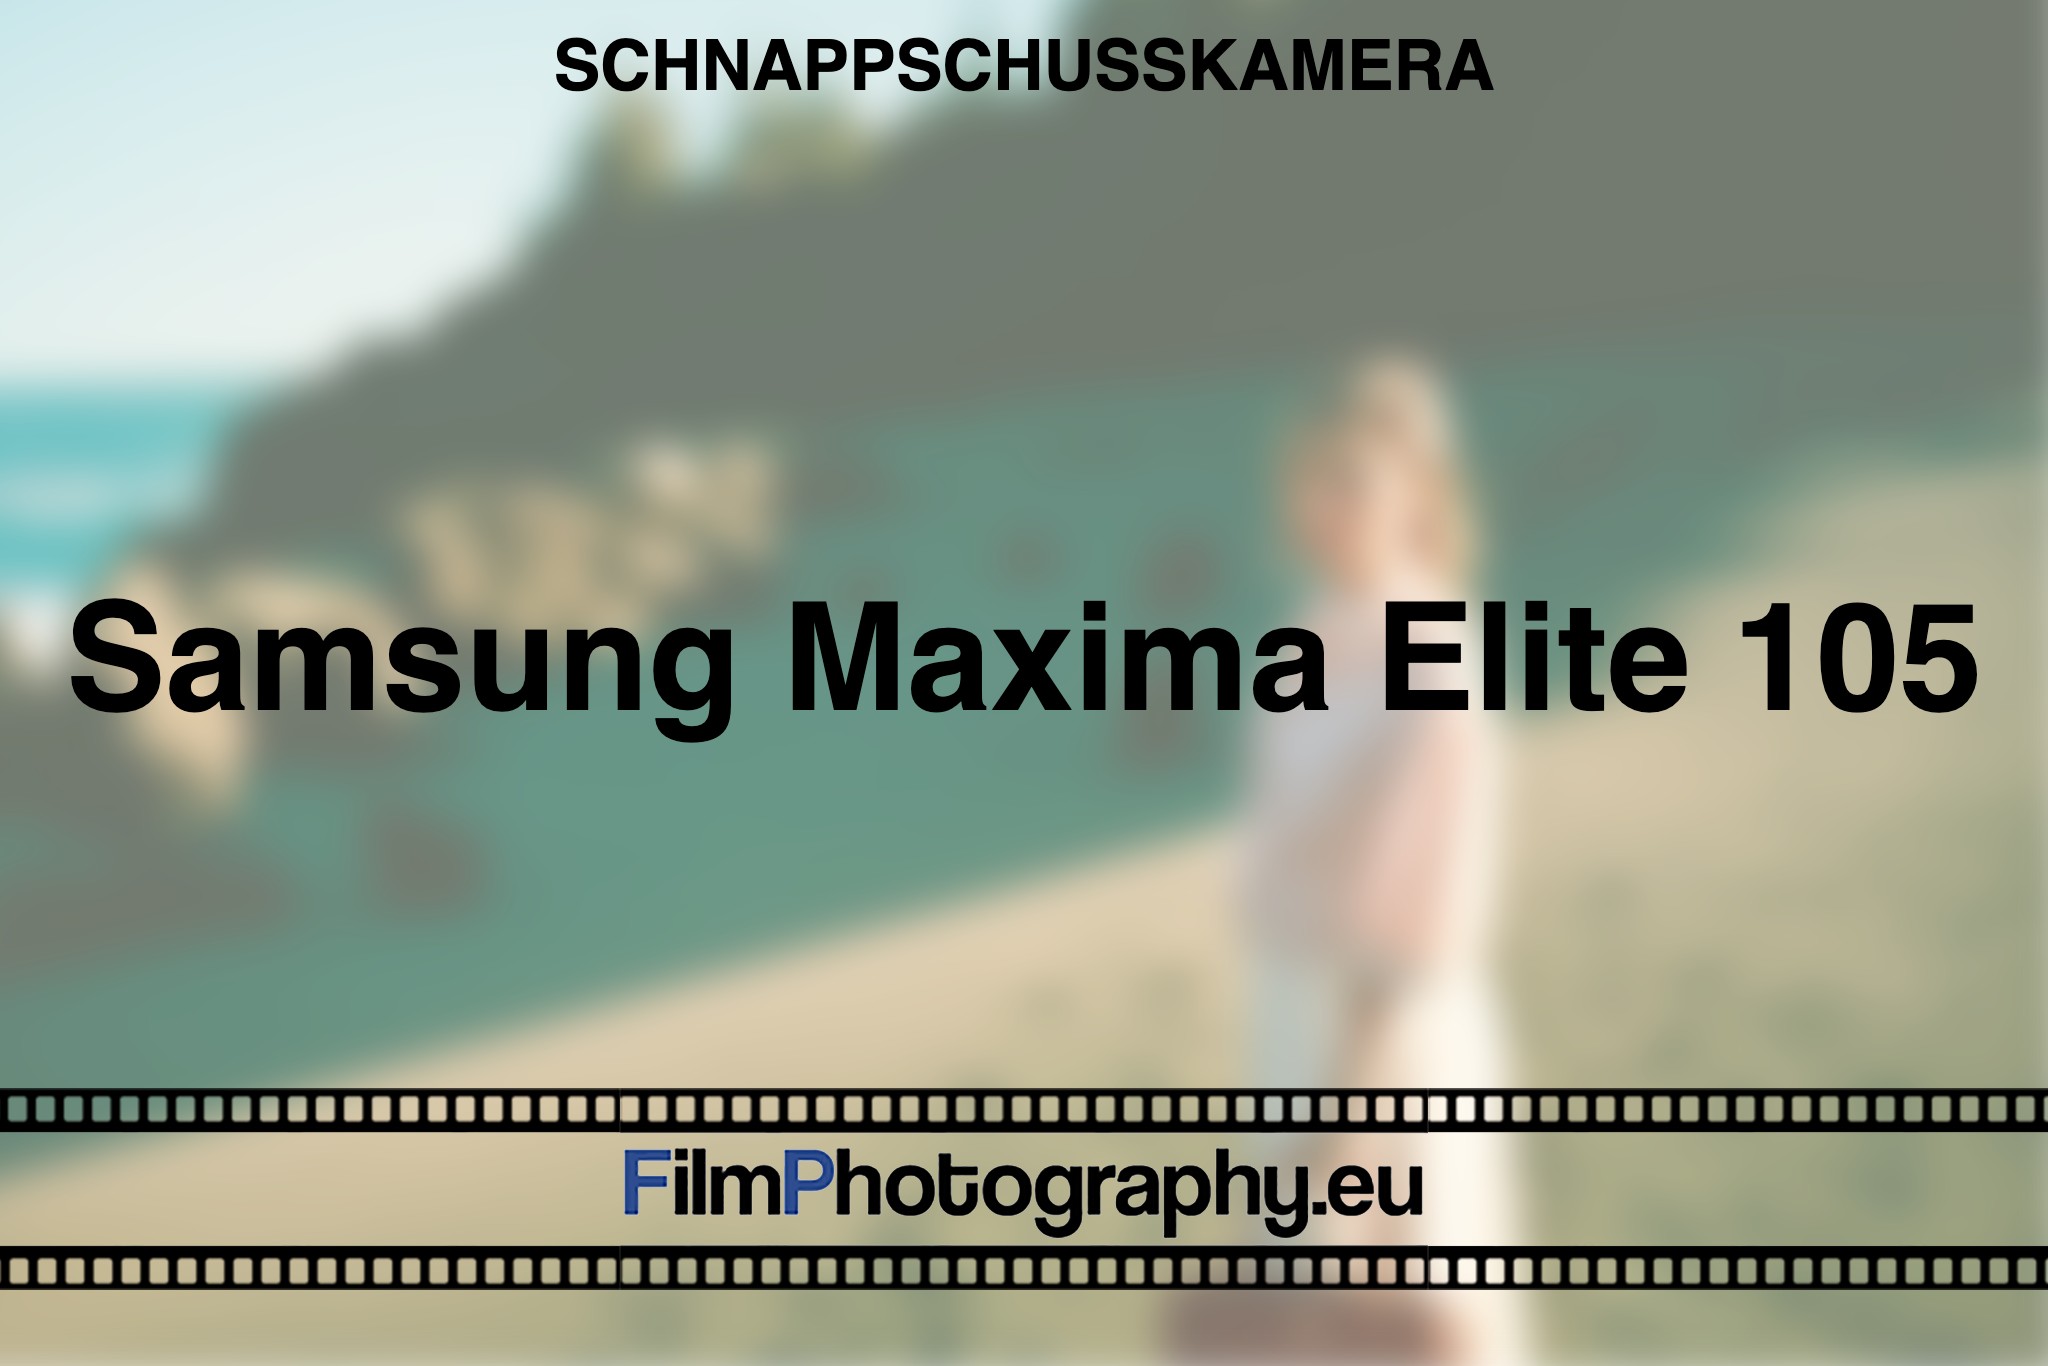 samsung-maxima-elite-105-schnappschusskamera-bnv